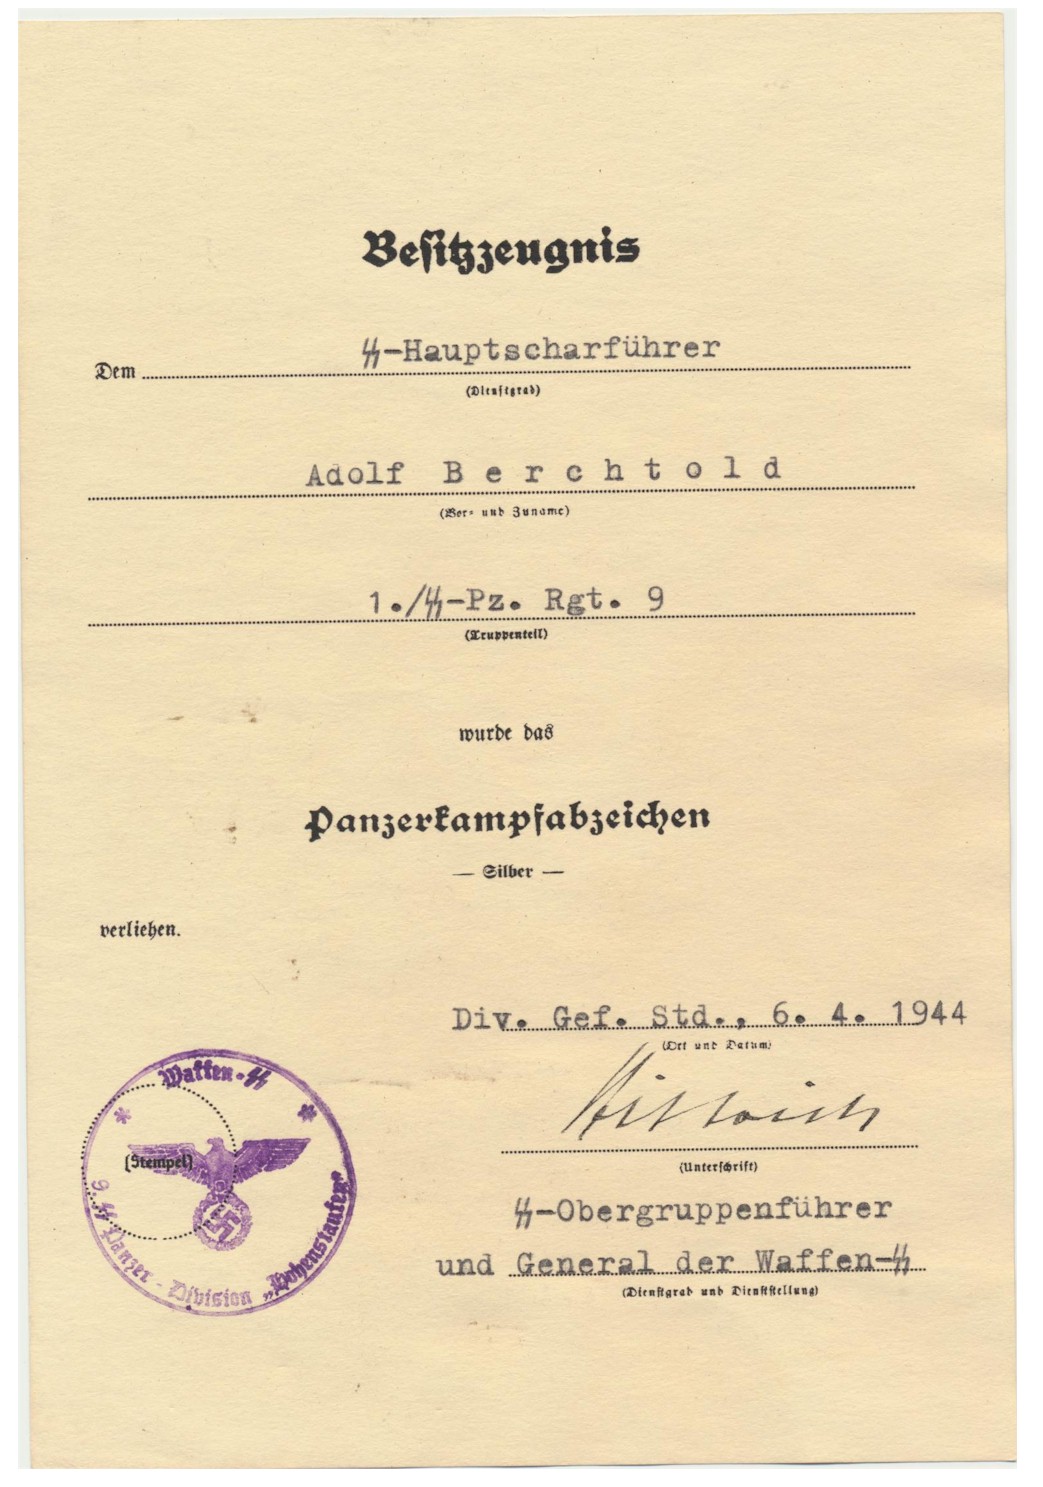 GERMAN PANZER ASSAULT SILVER SS HAUPTSCHARFUHRER ADOLF BERCHTOLD 1.SS PZ RGT 9 HOHENSTAUFEN DOCUMENT 